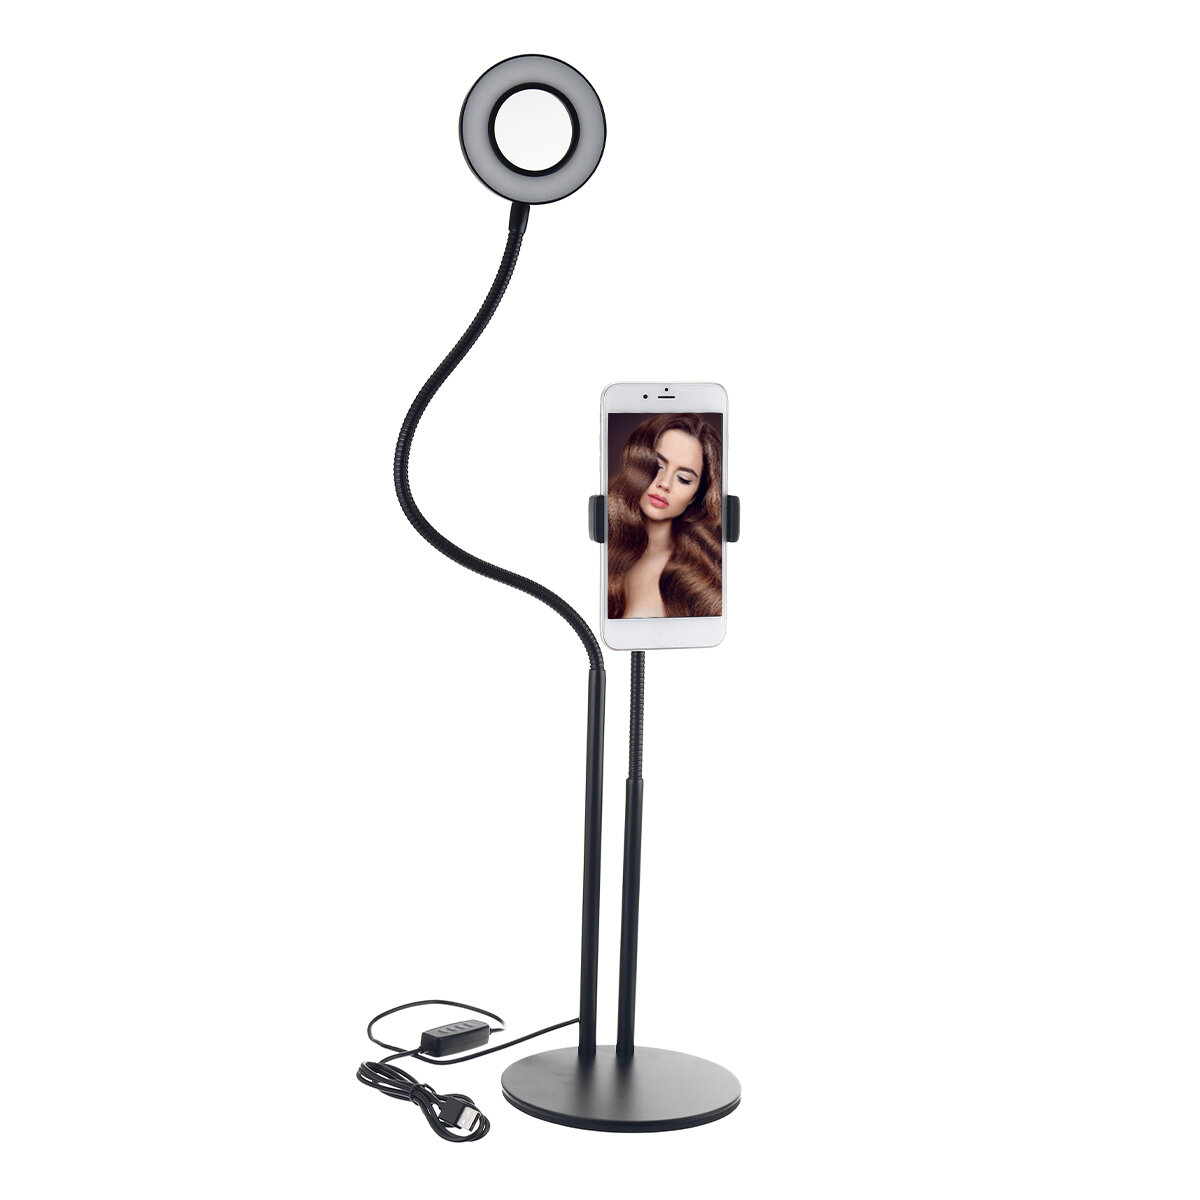 Image of BX-02 Universal Selfie Ring Light Flexible Desk Lamp LED Fill Beauty Light 11 Brightness 3 Color Dimmable for Live Strea